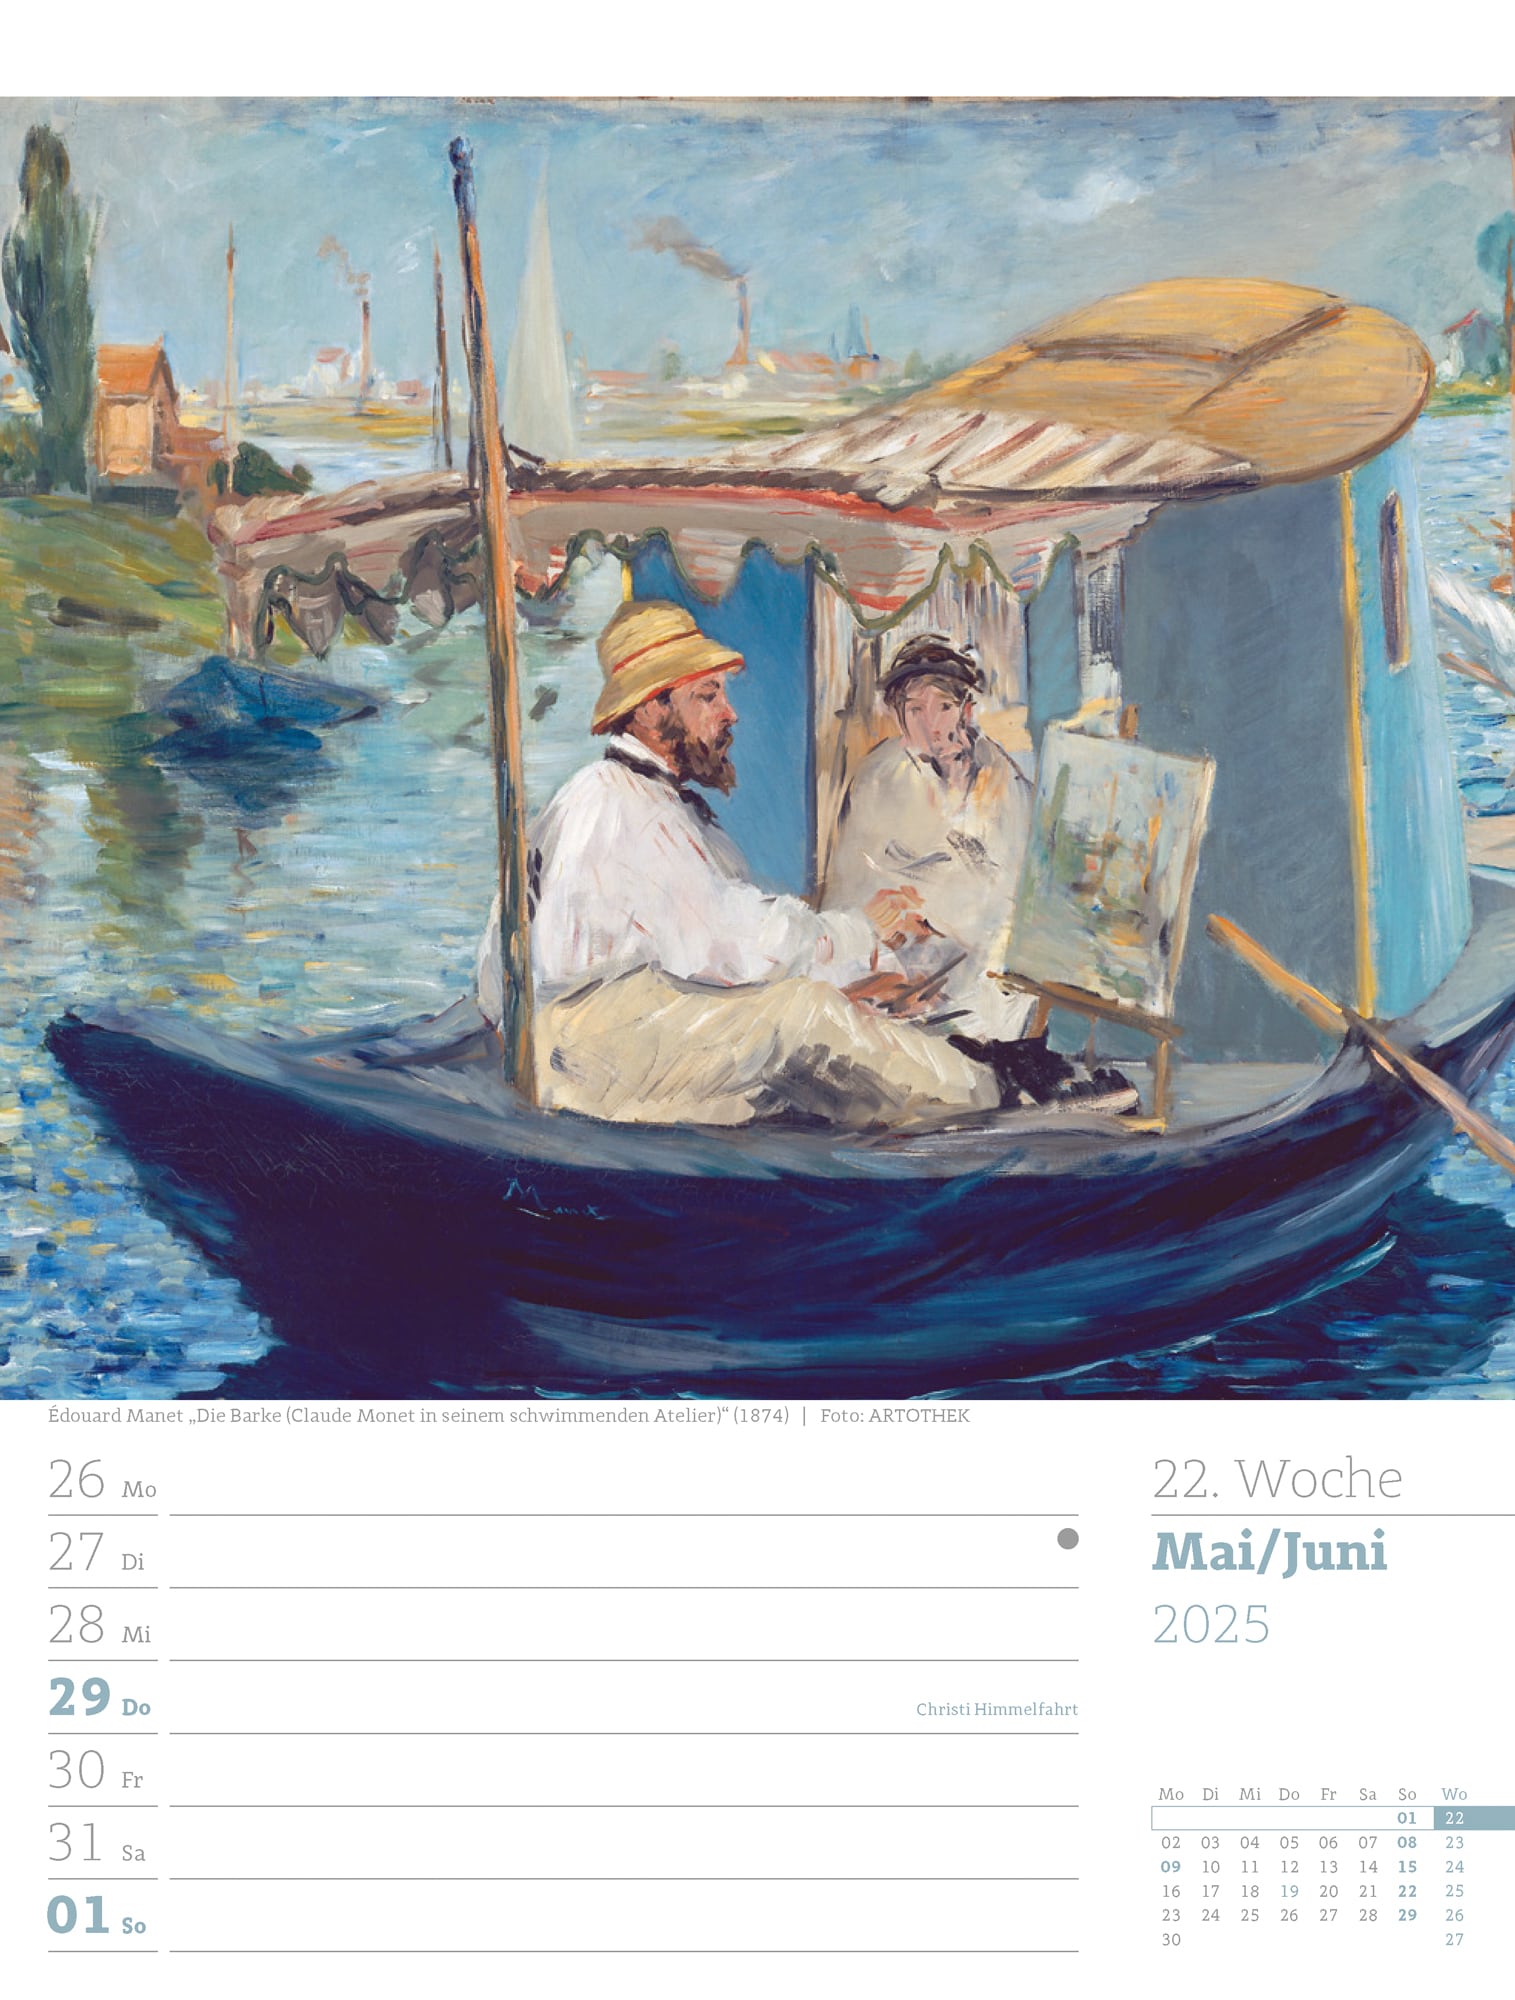 Ackermann Calendar World of Art 2025 - Weekly Planner - Inside View 25